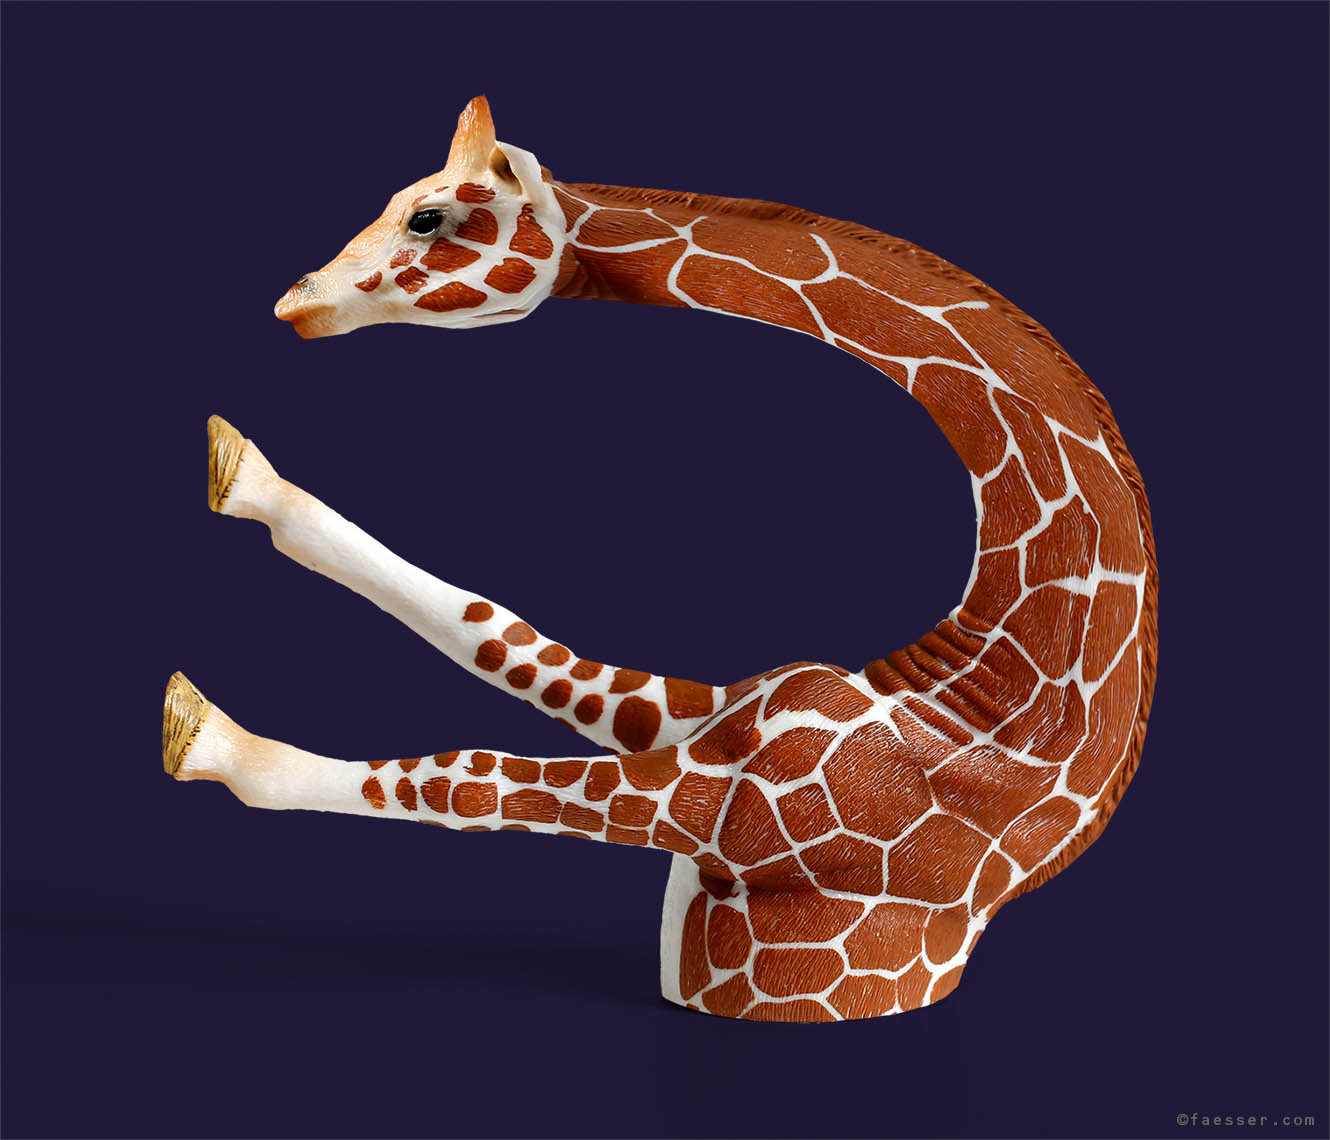 A giraffe is showing the Foot Kisser figure as a new Asana exercise; work of art as figurative sculpture; artist Roland Faesser, sculptor and painter 2019